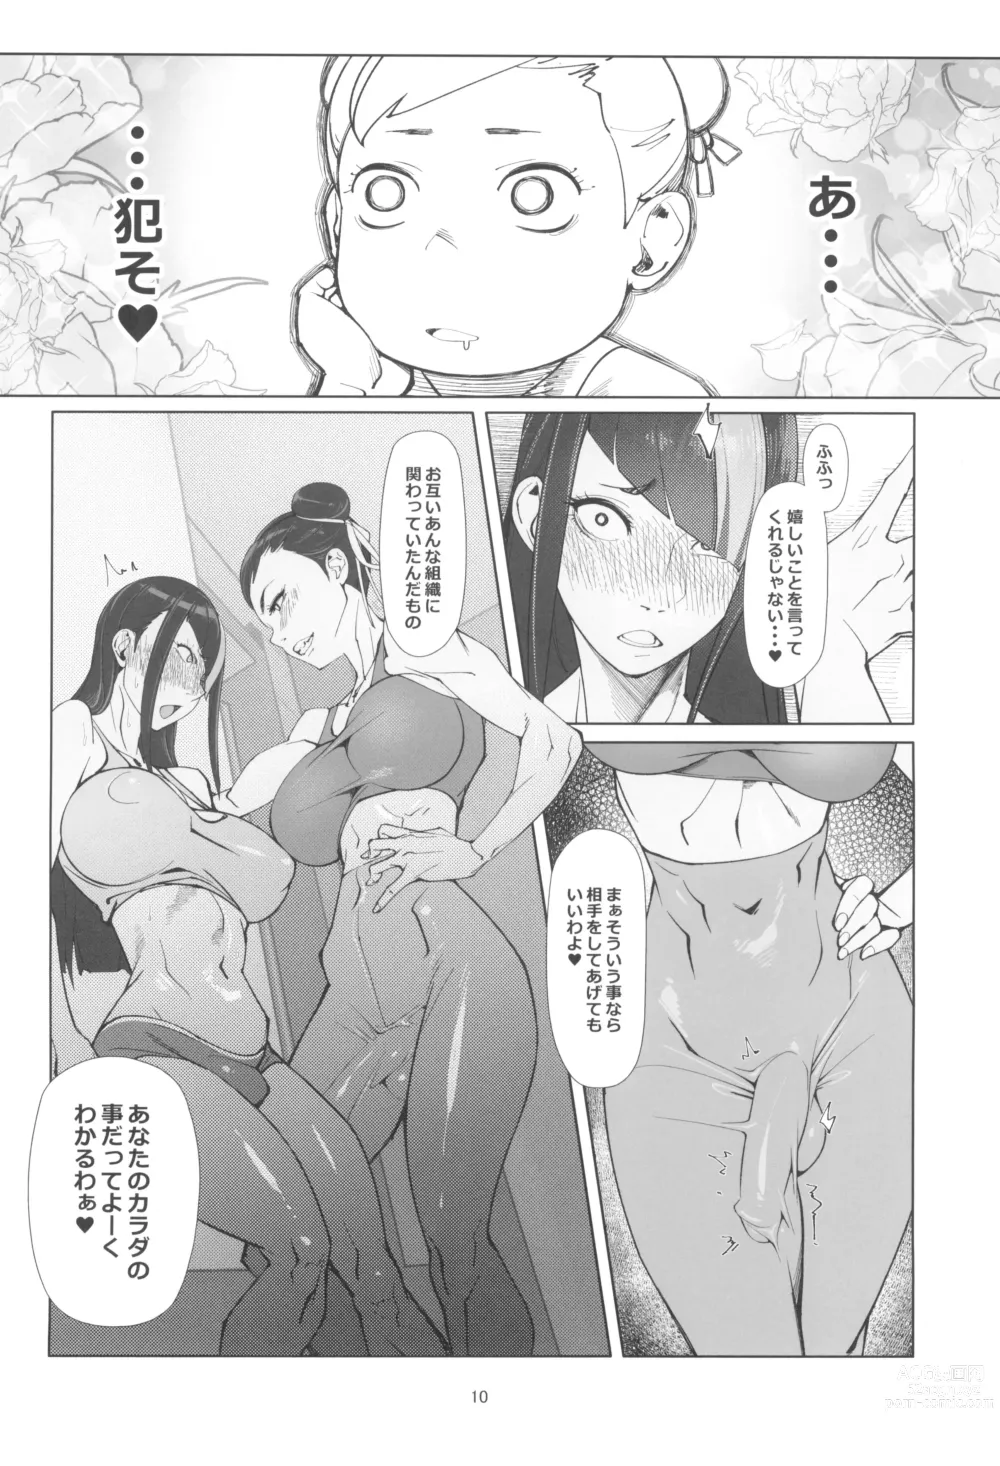 Page 10 of doujinshi Backstab